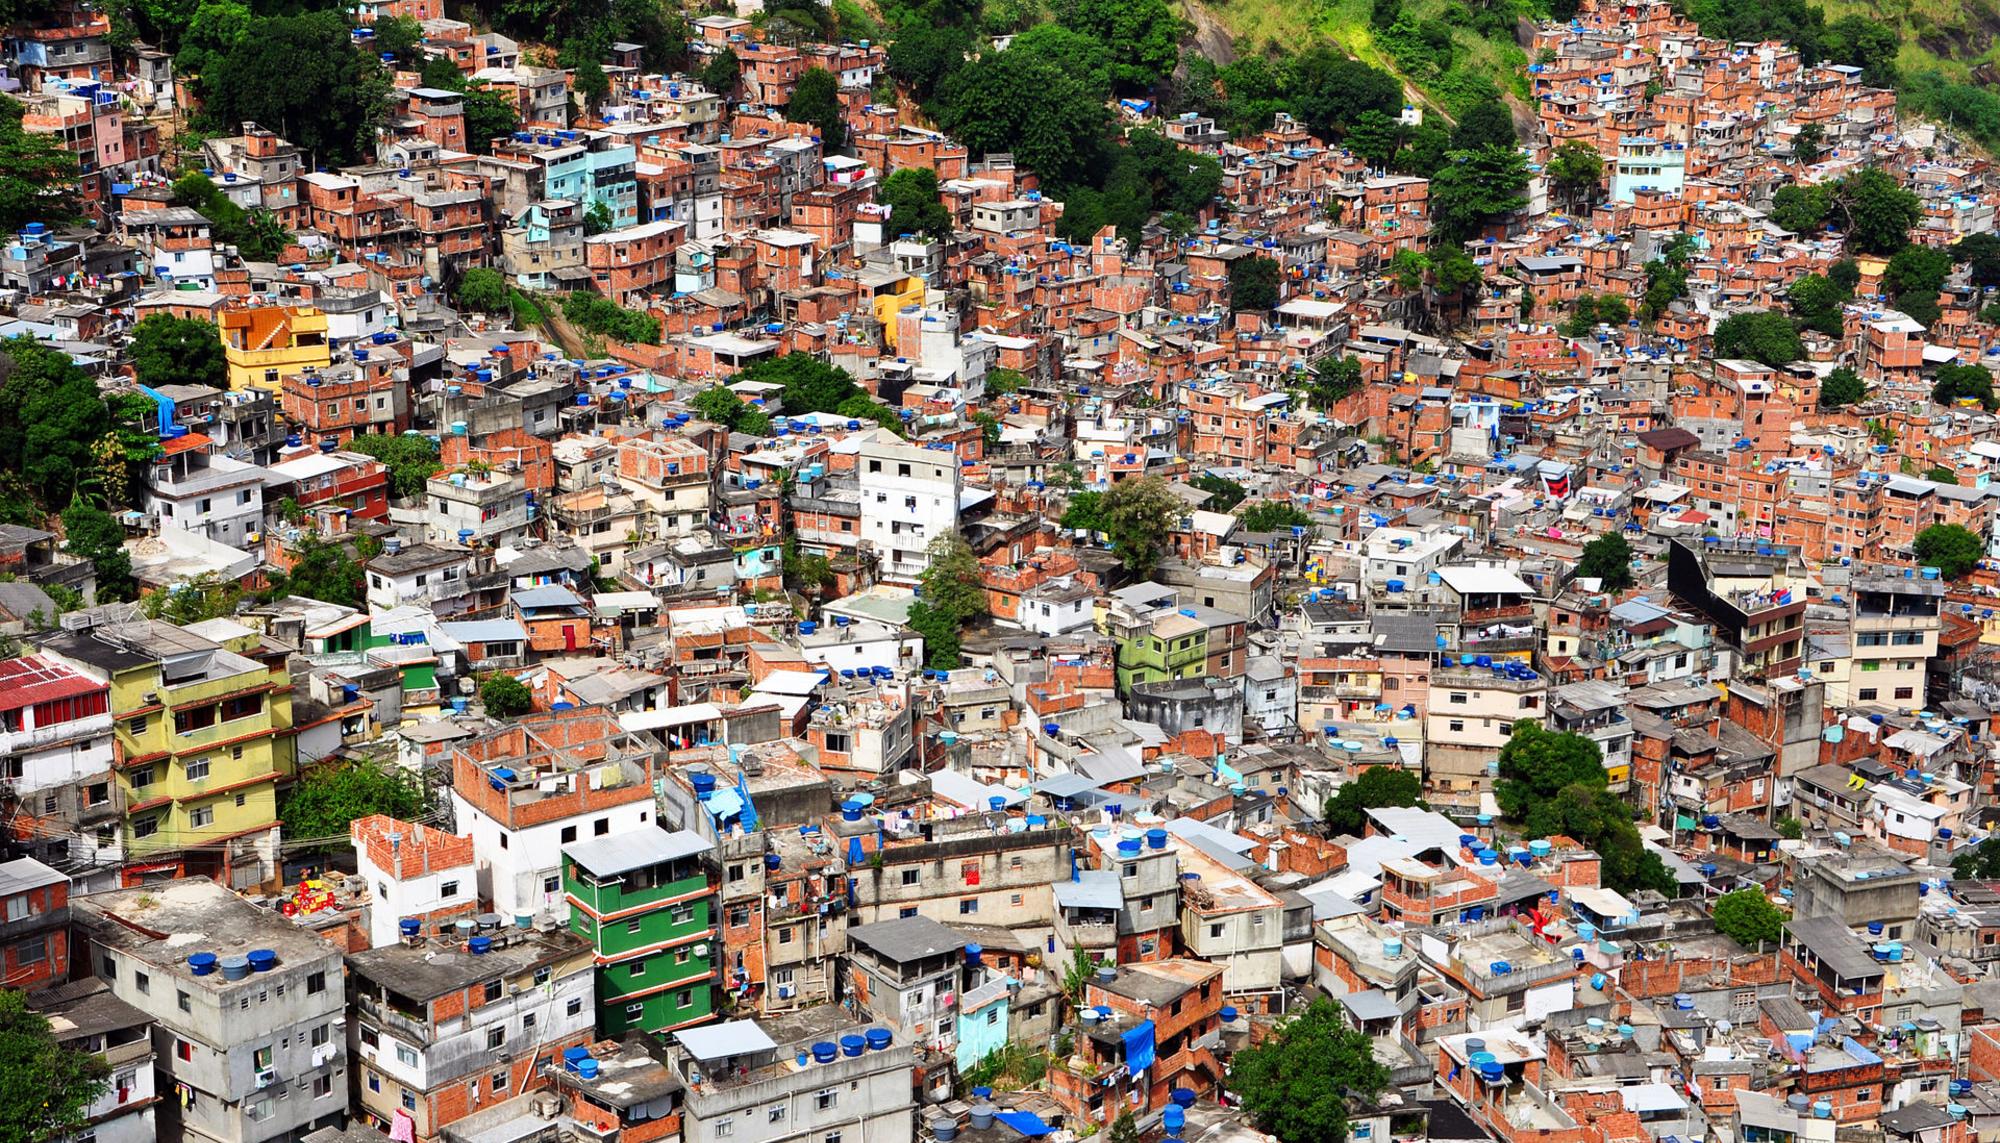 Rocinha favela, Rio de Janeiro, Brazil, 2010